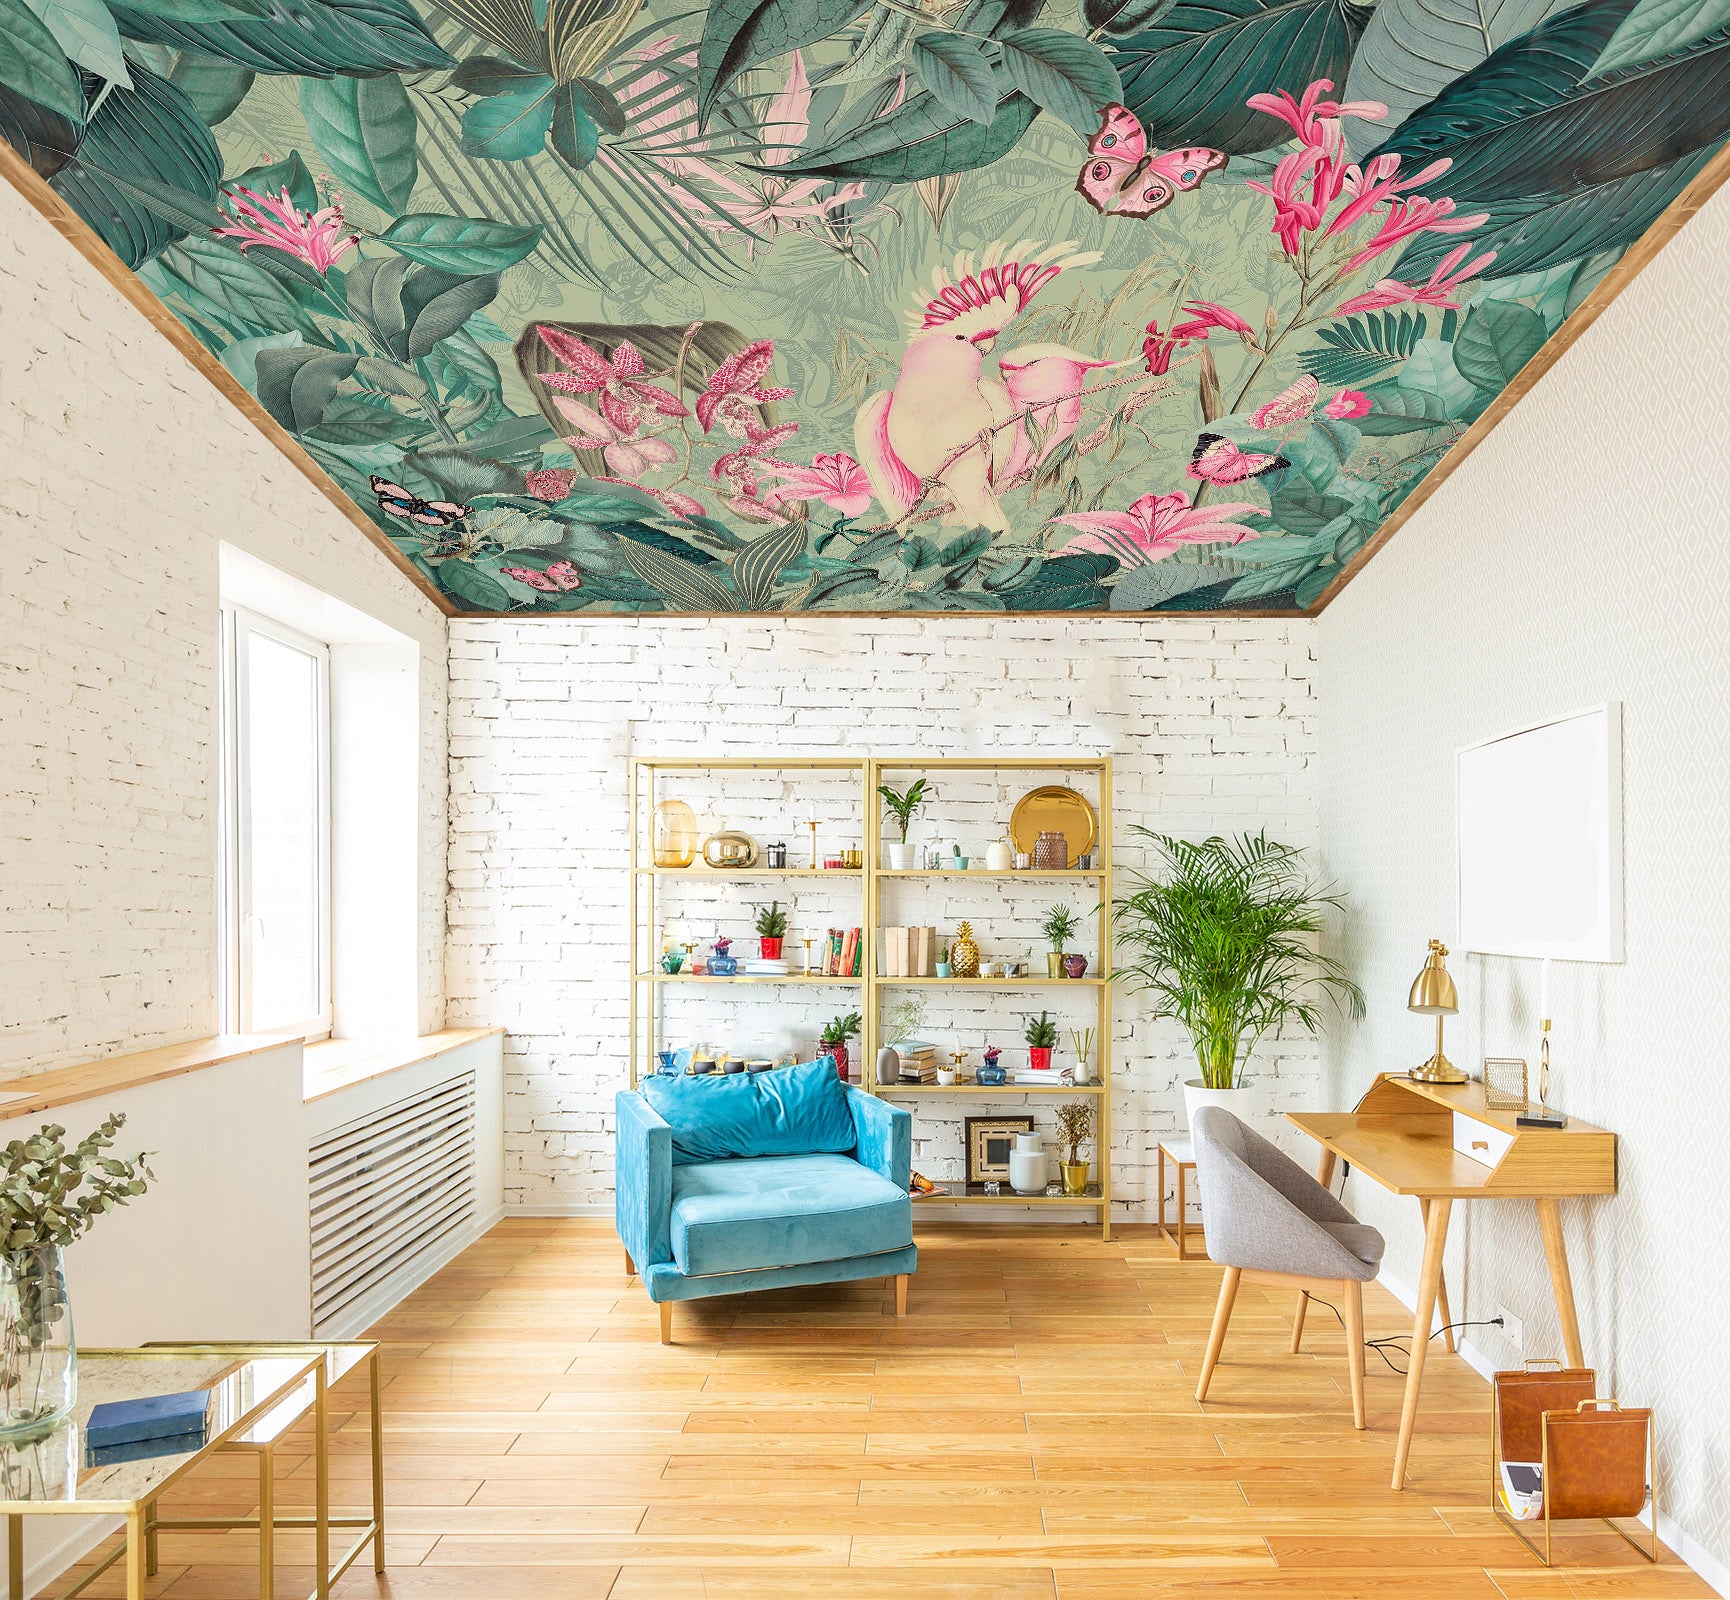 3D Pink Parrot Leaves 971 Andrea Haase Ceiling Wallpaper Murals